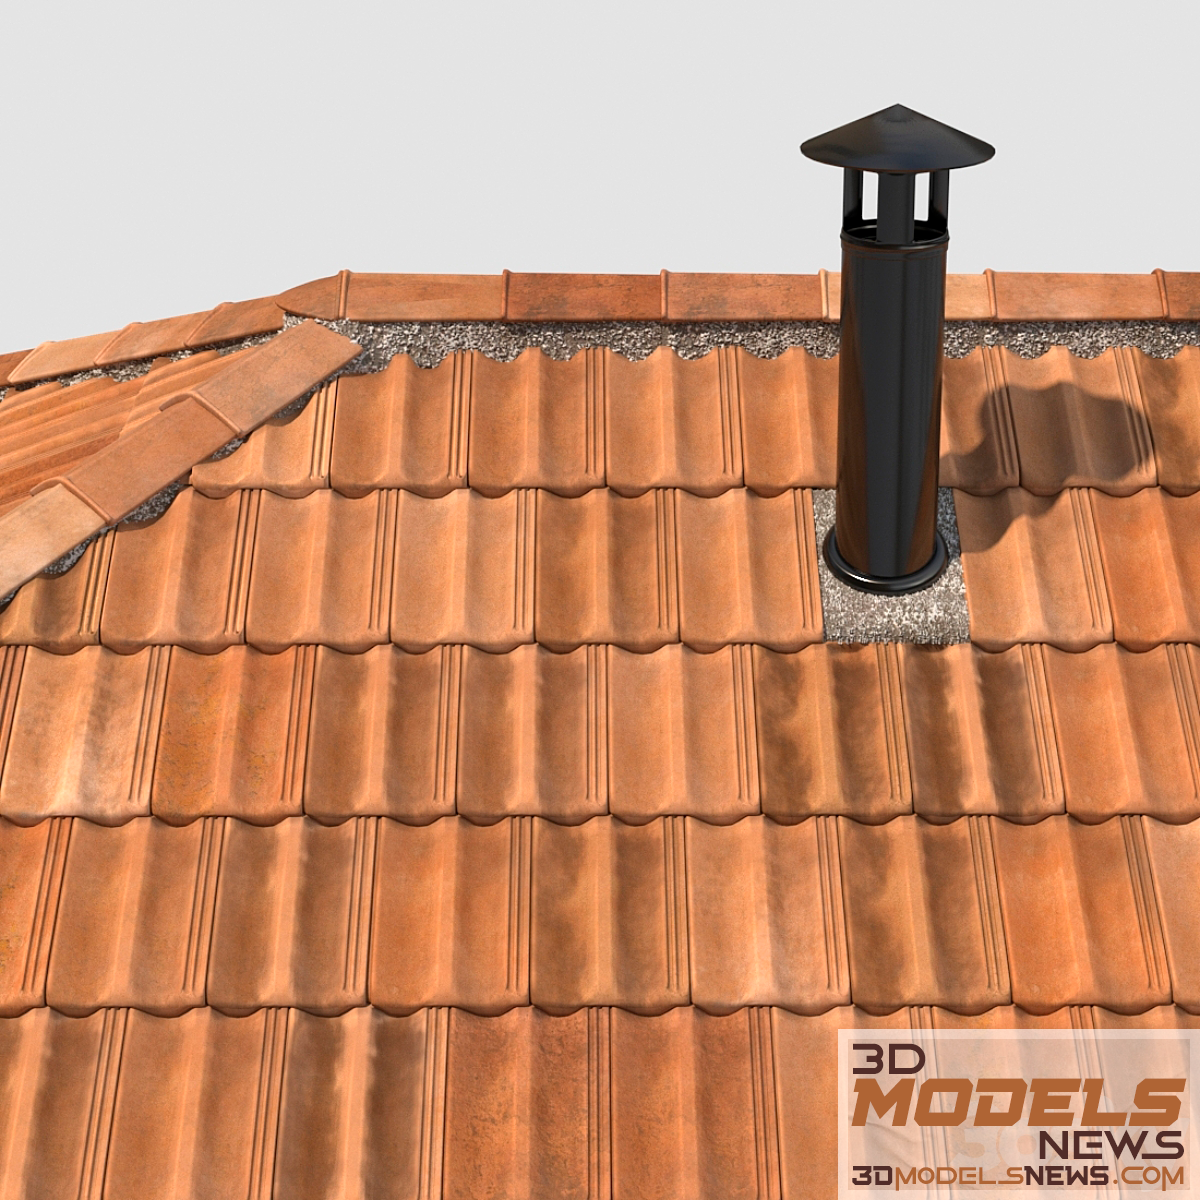 French tile roof model 2